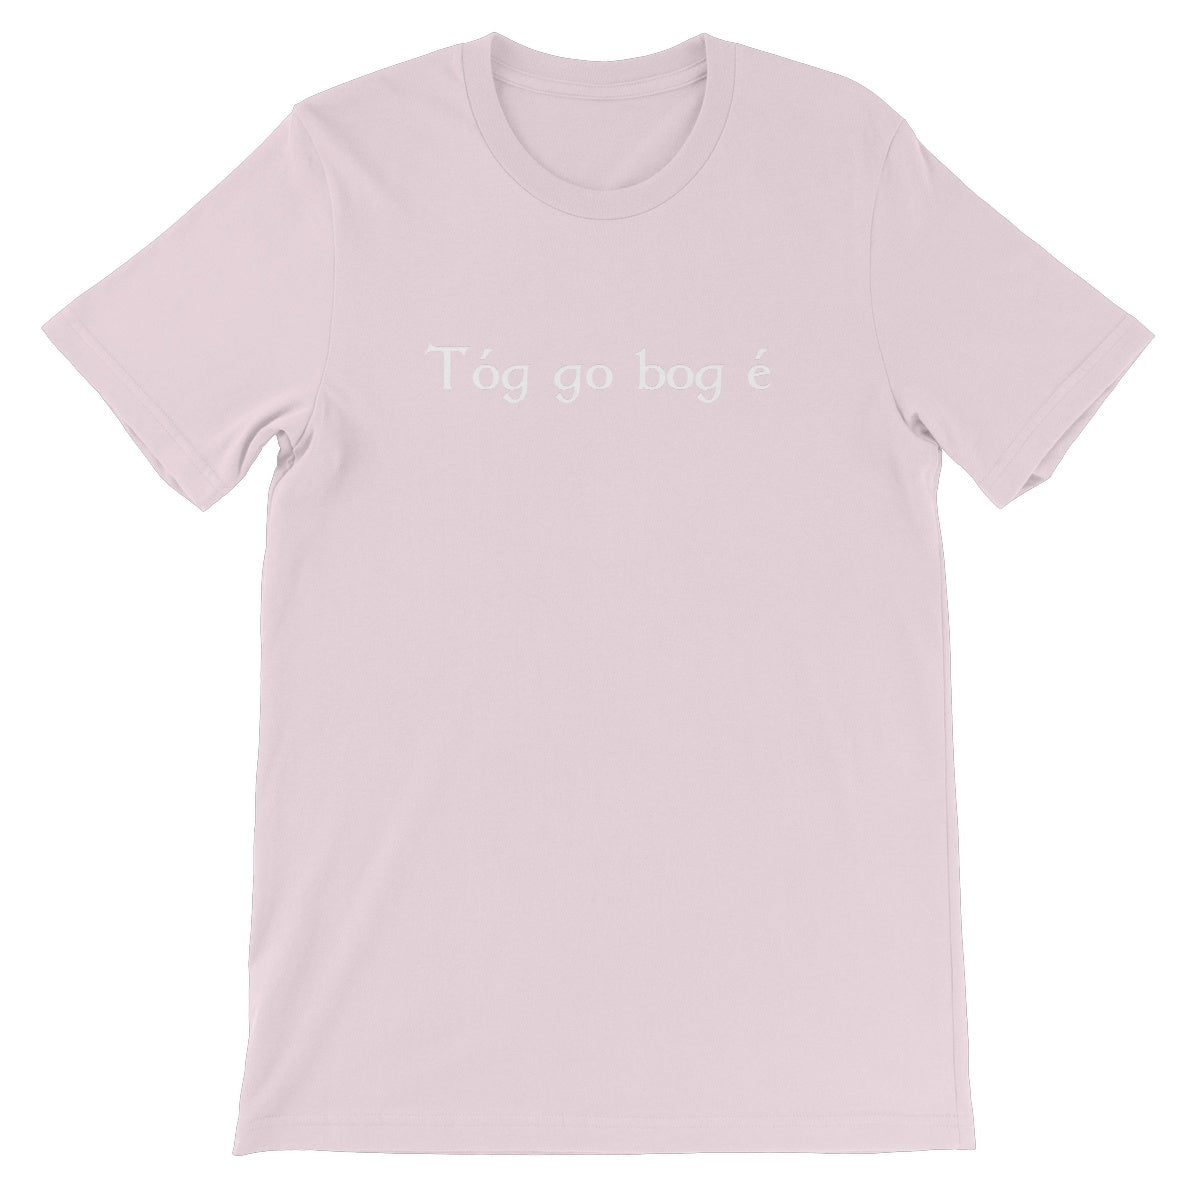 Irish Gaelic "Take it easy" T-Shirt